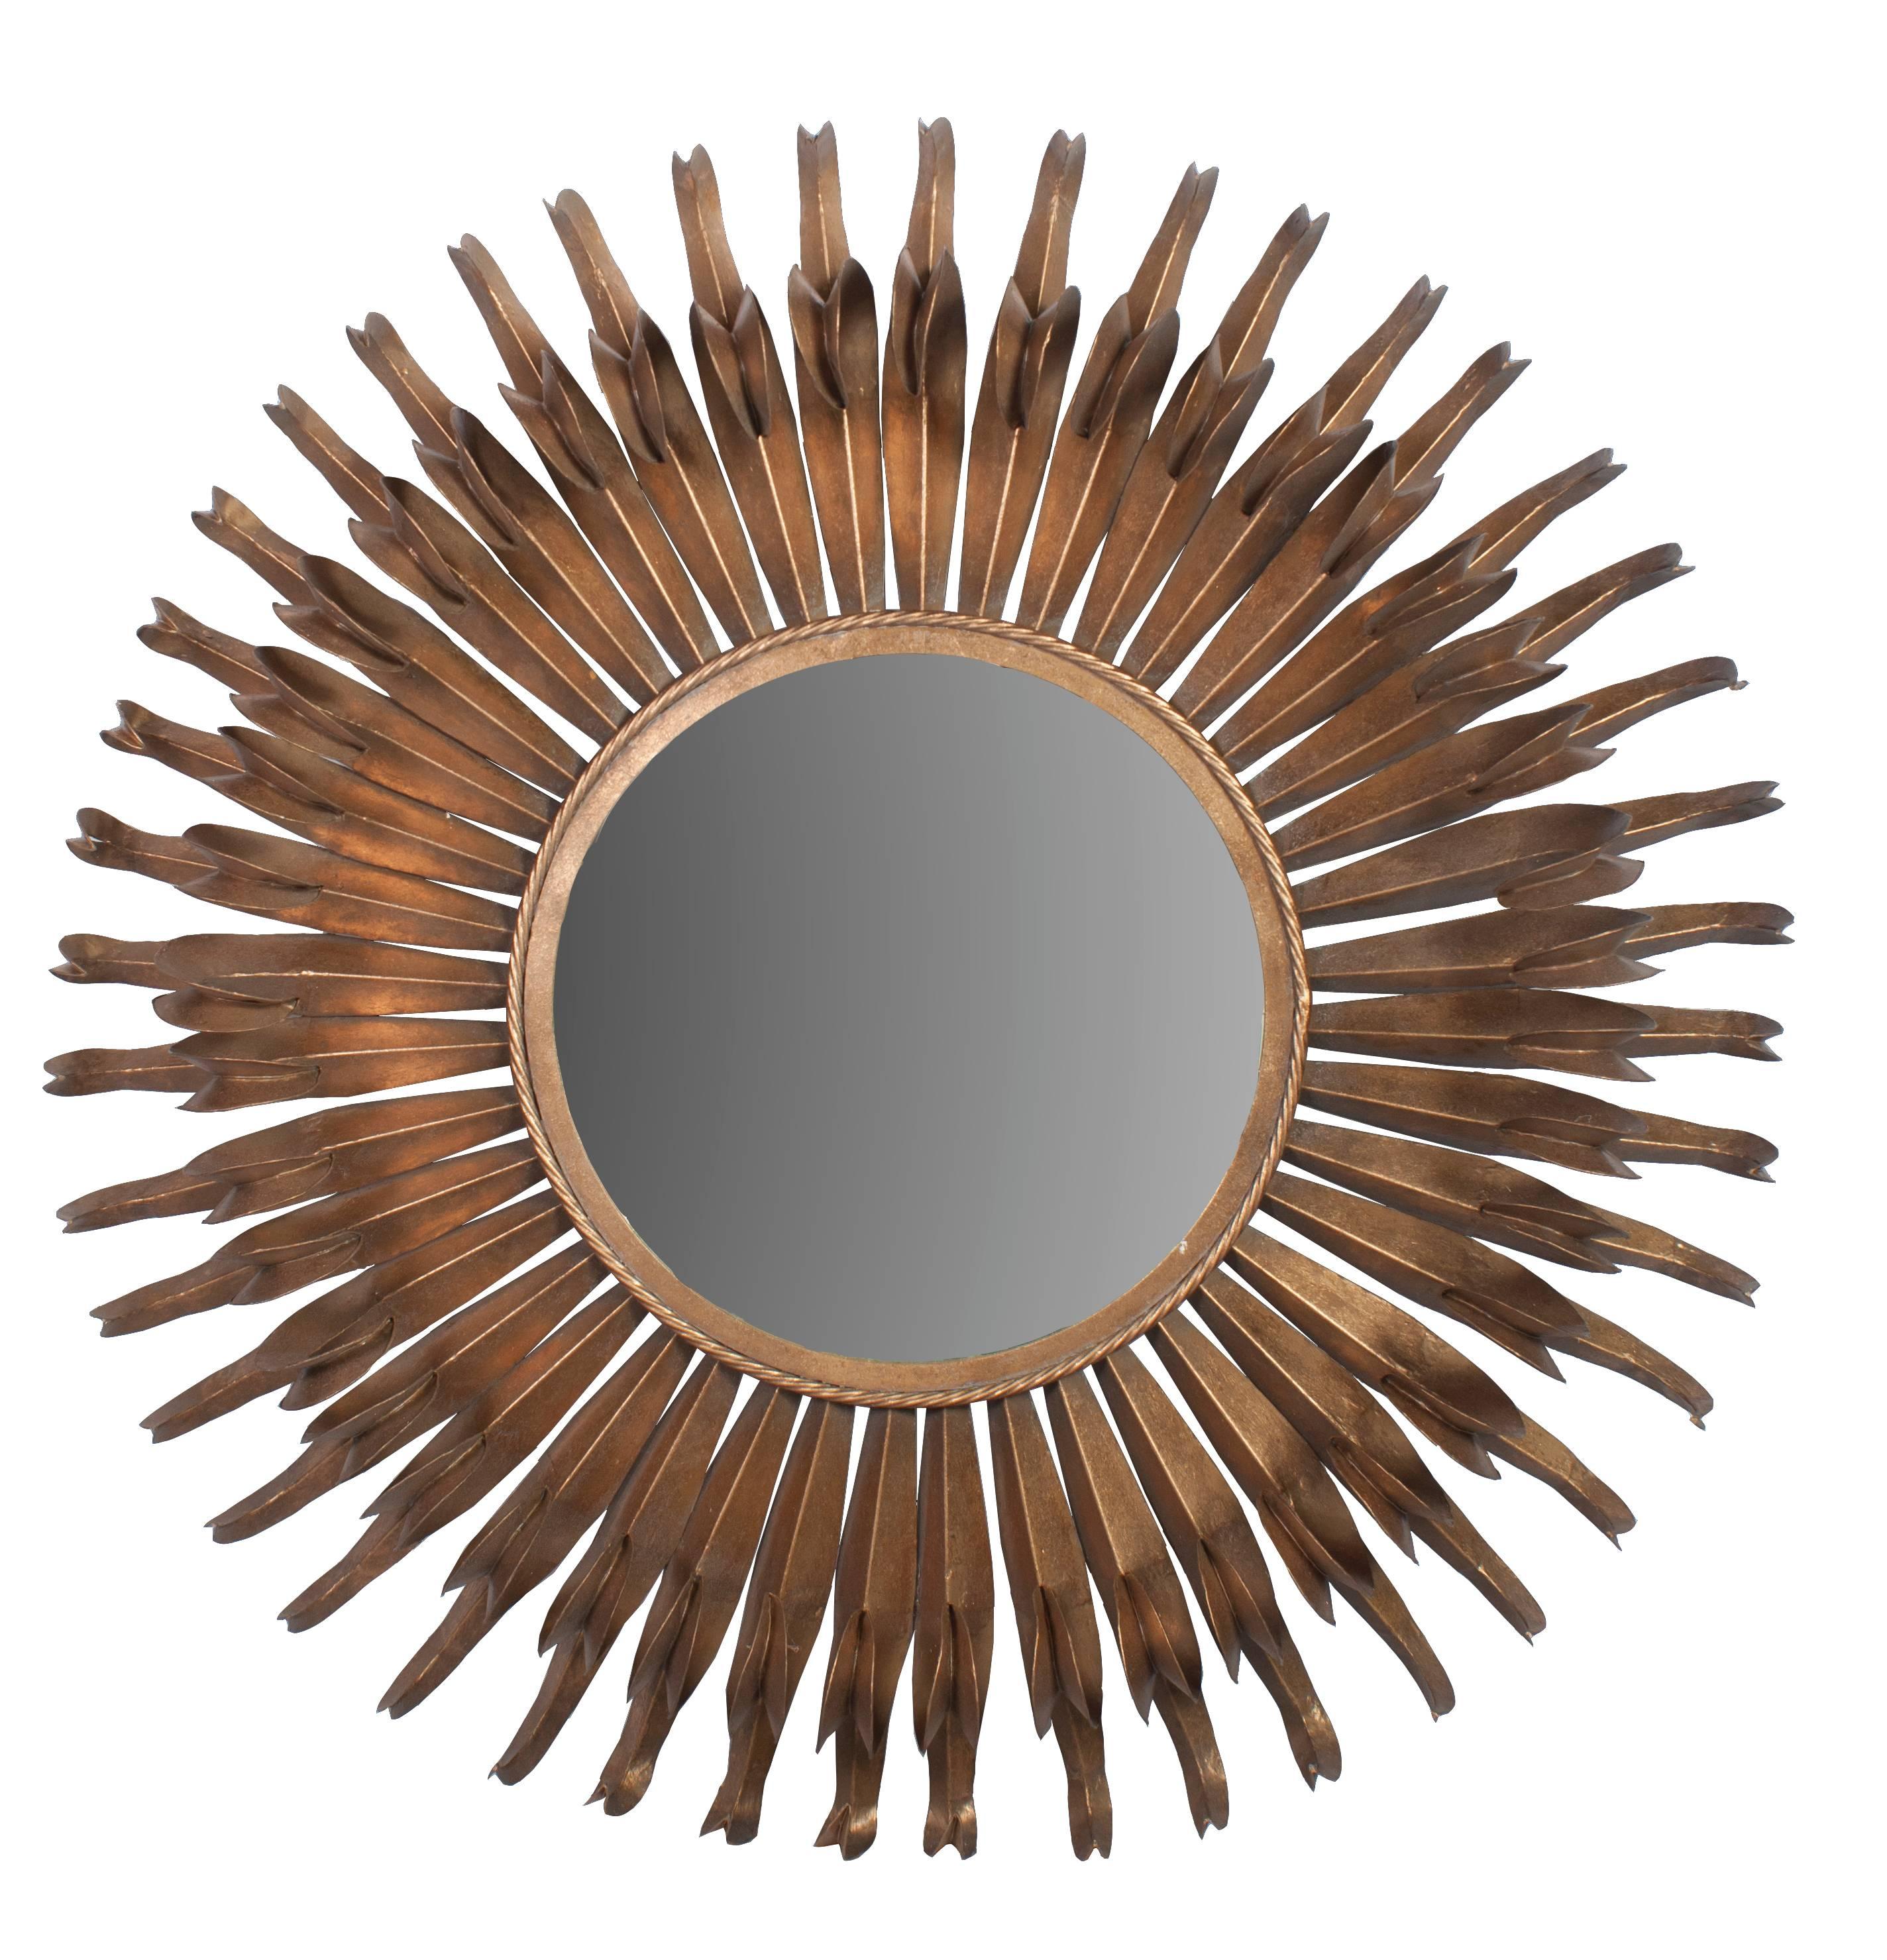 Large Round Metal Sunburst Mirror